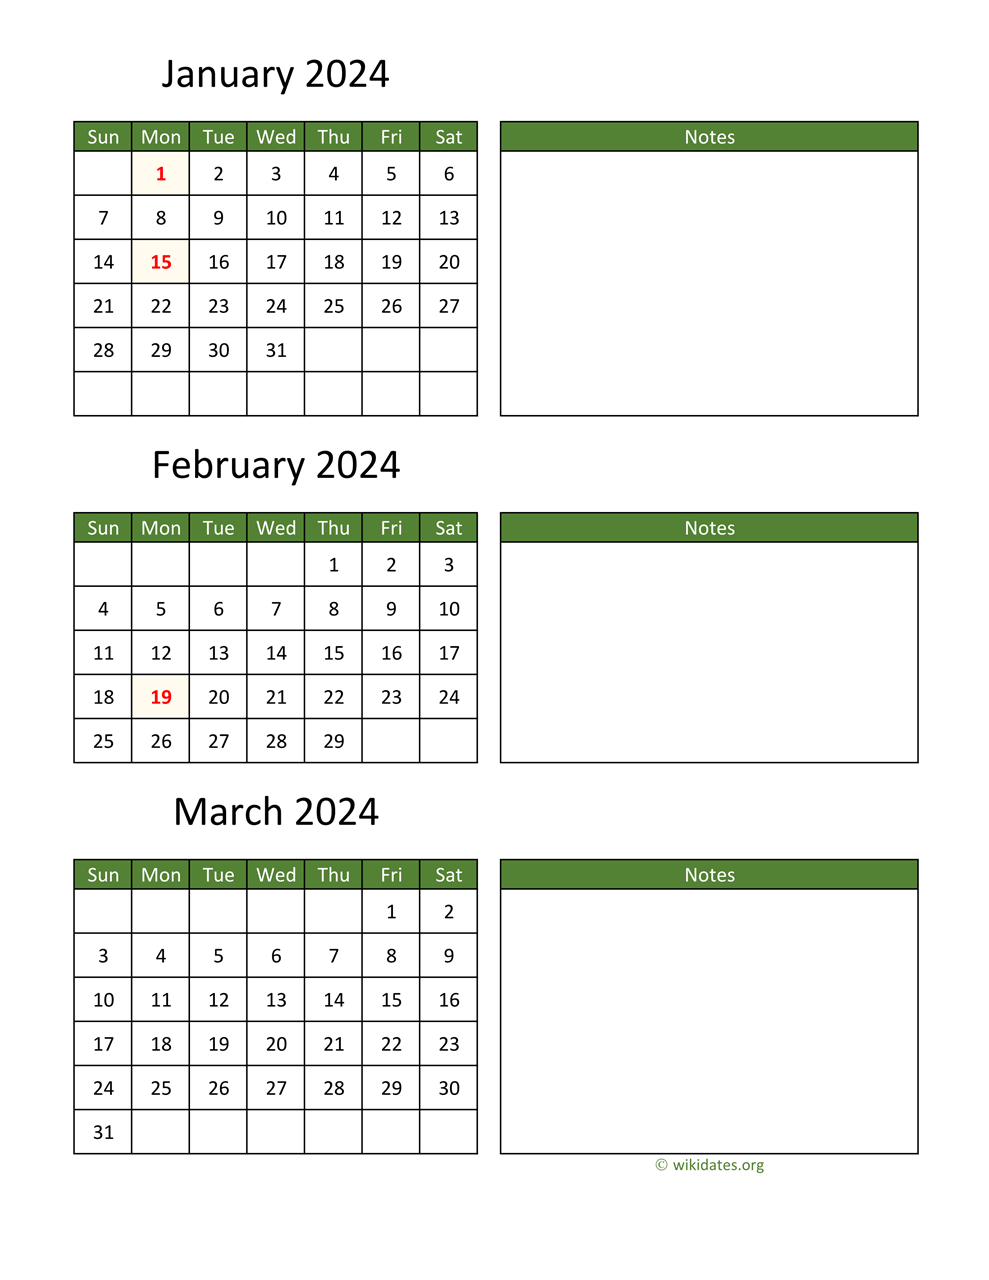 Calendar Spread 2024 Cool Top Most Popular Incredible Lunar Events 